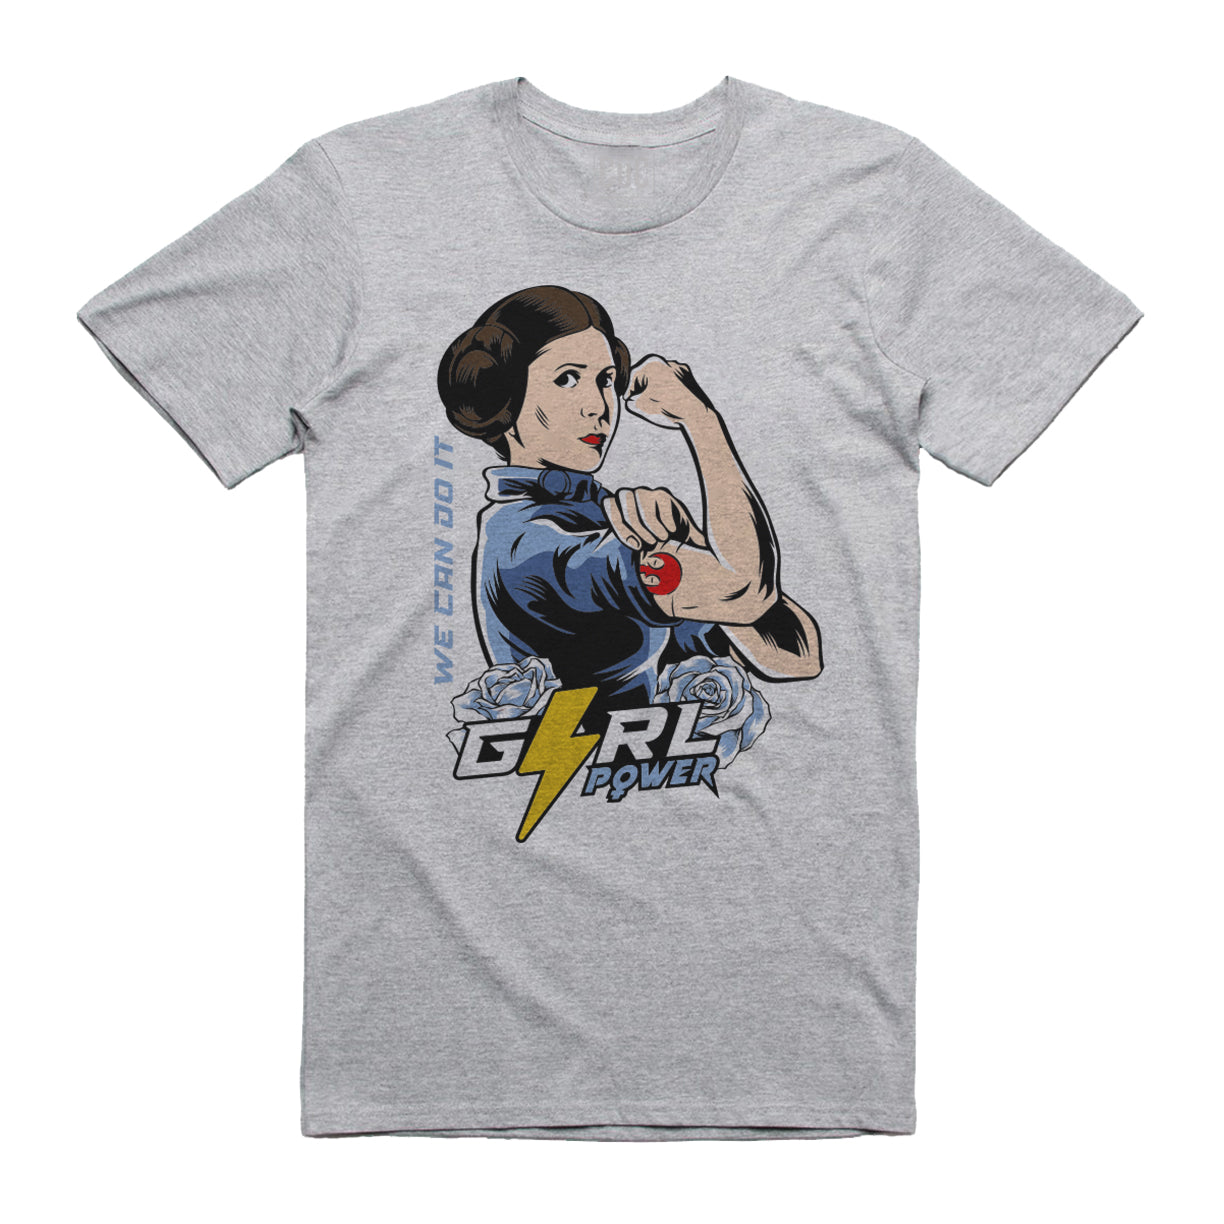 CUC T-Shirt Girl Power - We Can do It Leila #chooseurcolor - CUC chooseurcolor